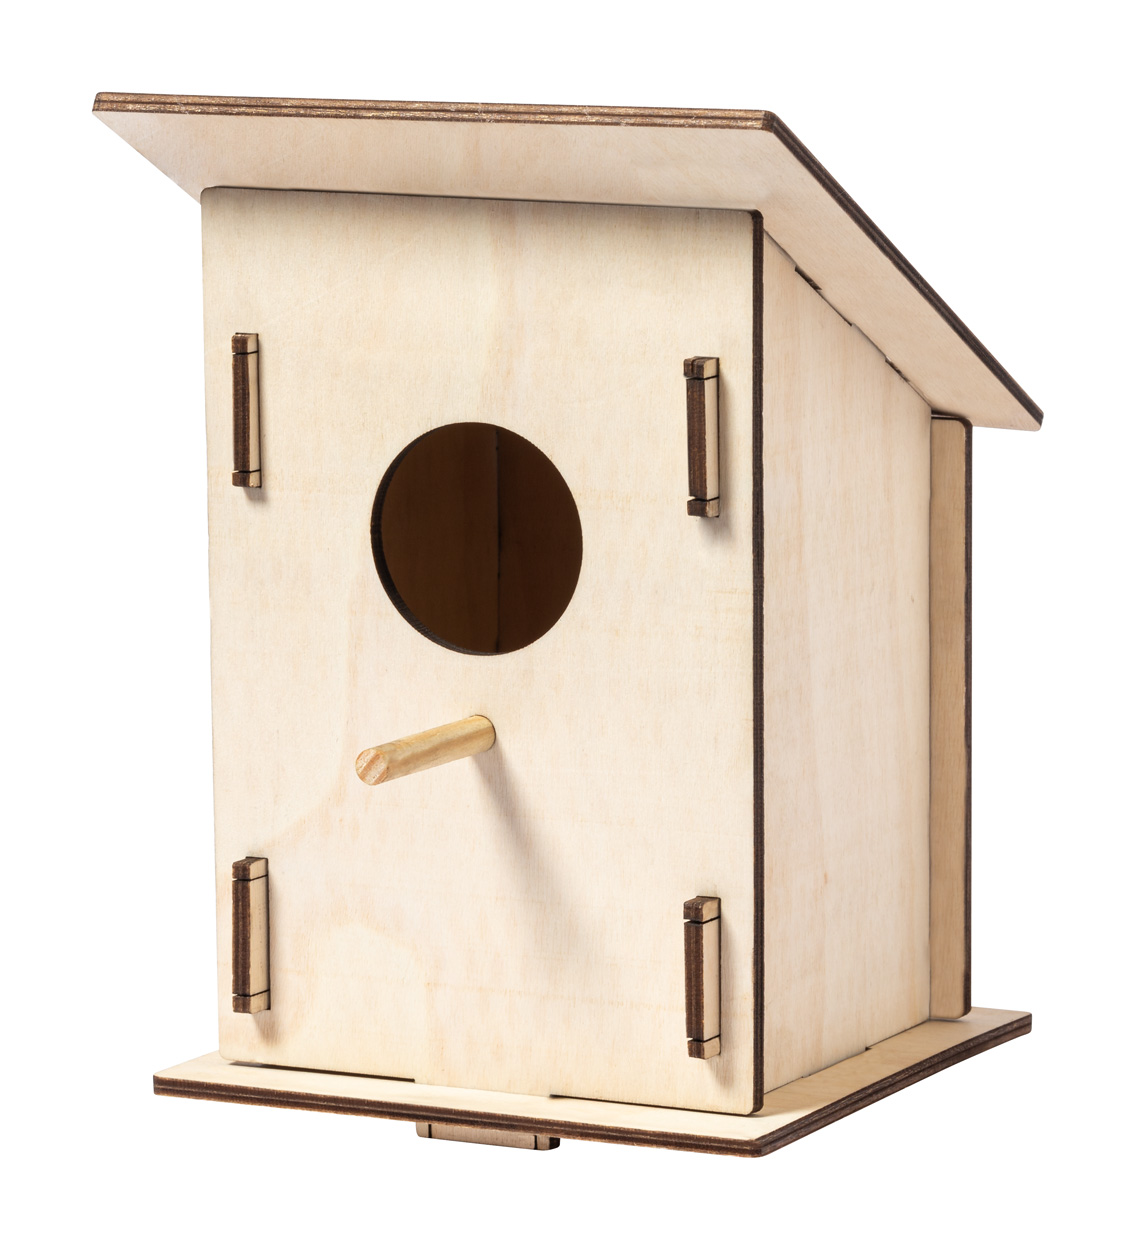 Pecker birdhouse - Beige